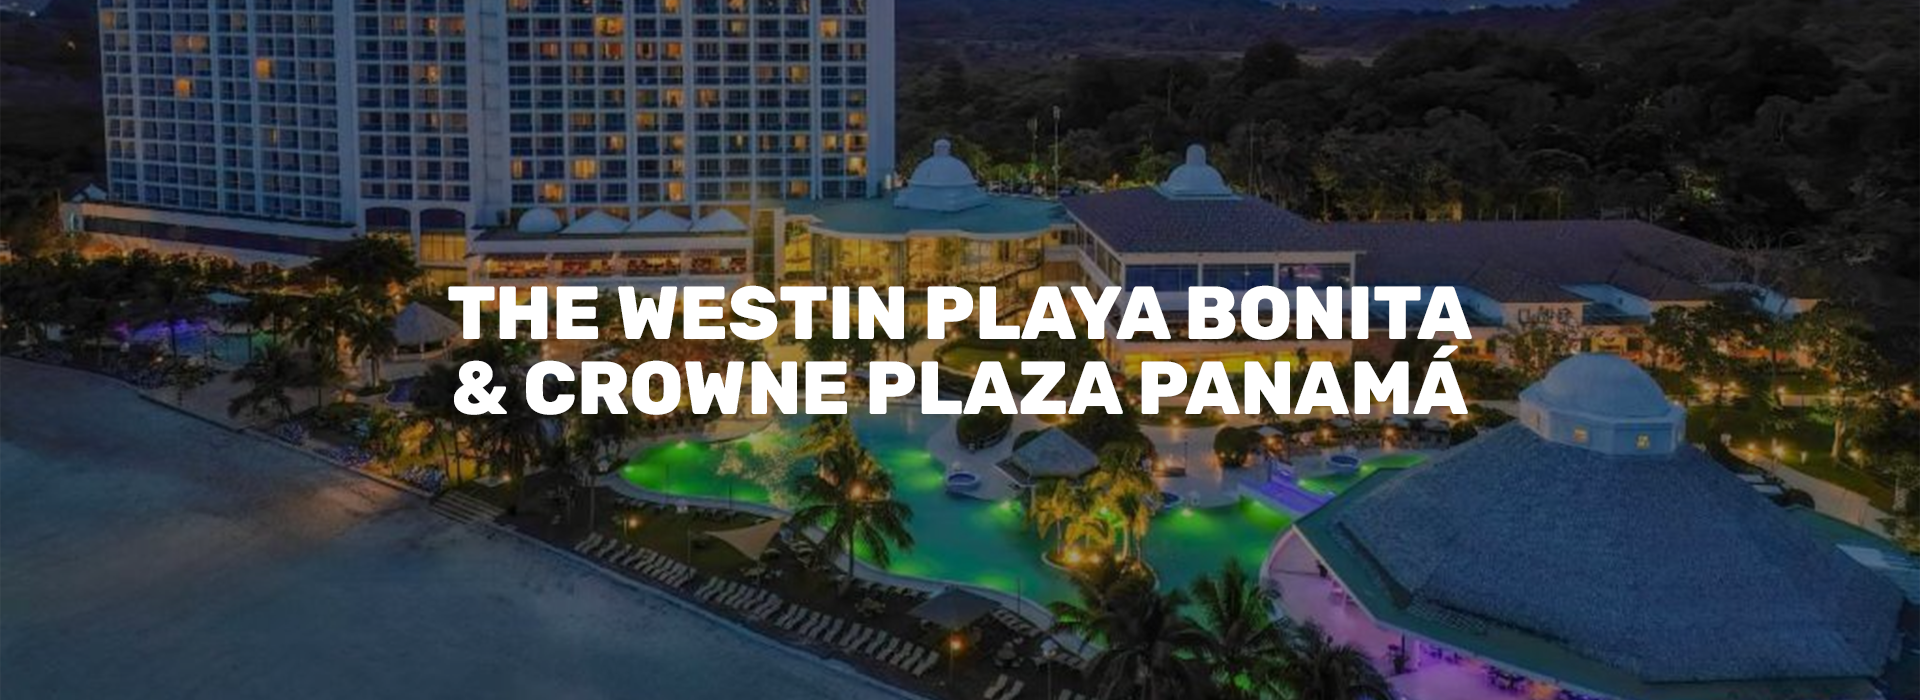 THE WESTIN PLAYA BONITA & CROWNE PLAZA PANAMA